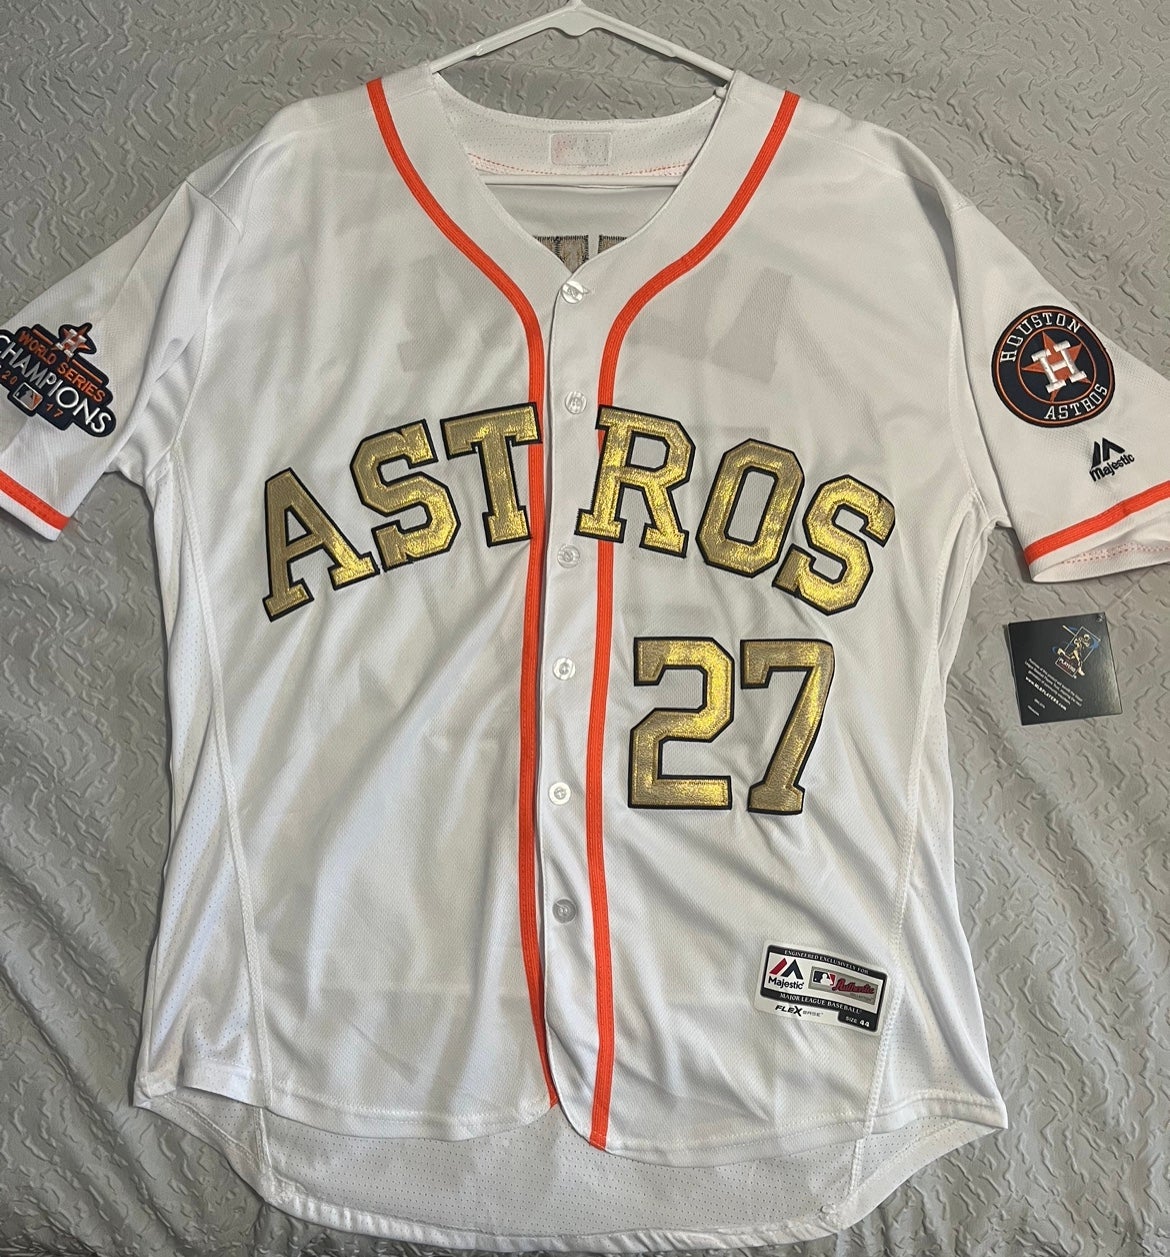 Jose Altuve #27 Houston Astros Baseball Jersey - White Color S-4XL